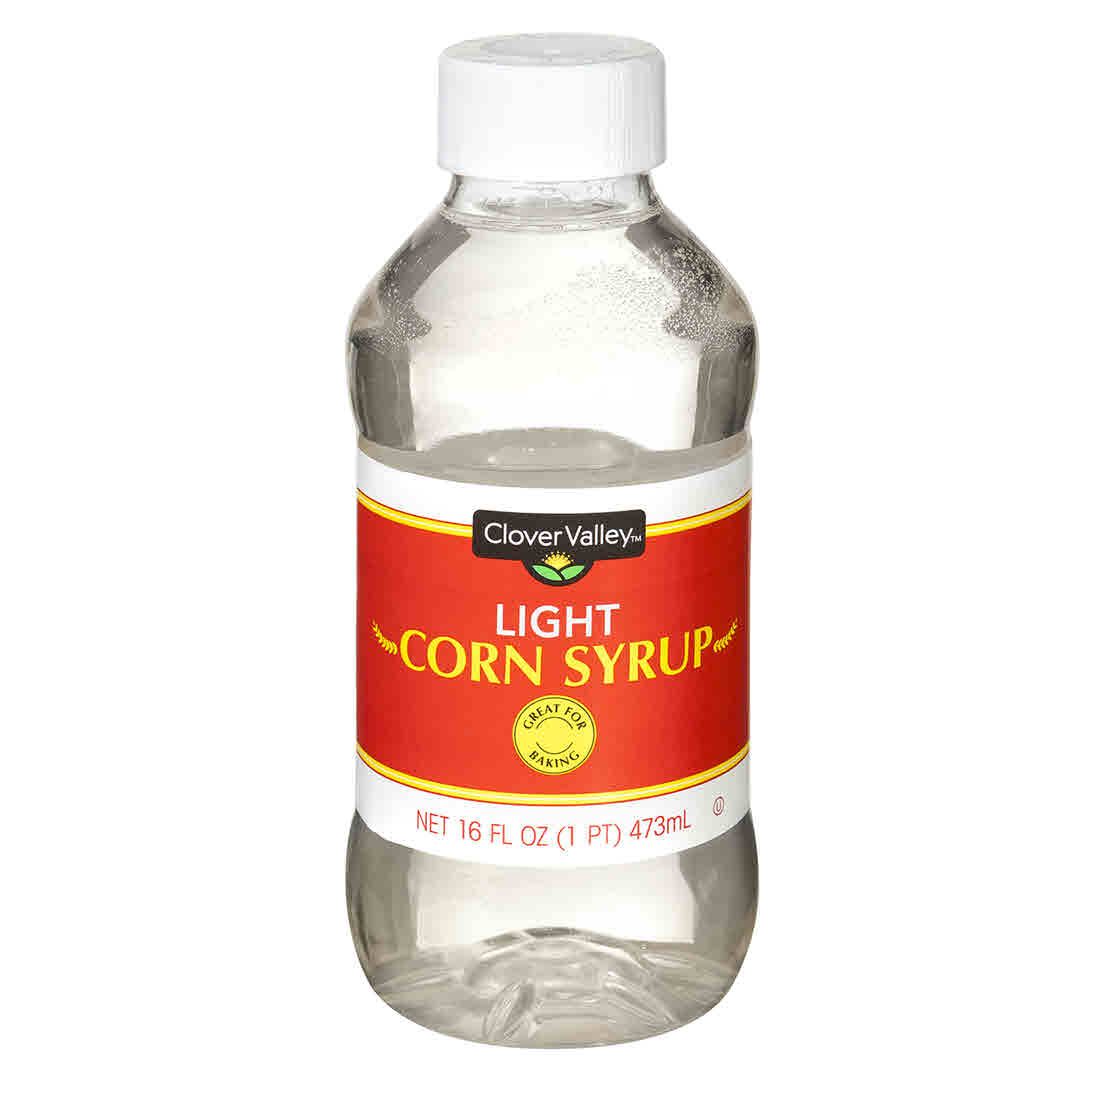 Clover Valley Light Corn Syrup, 16 oz